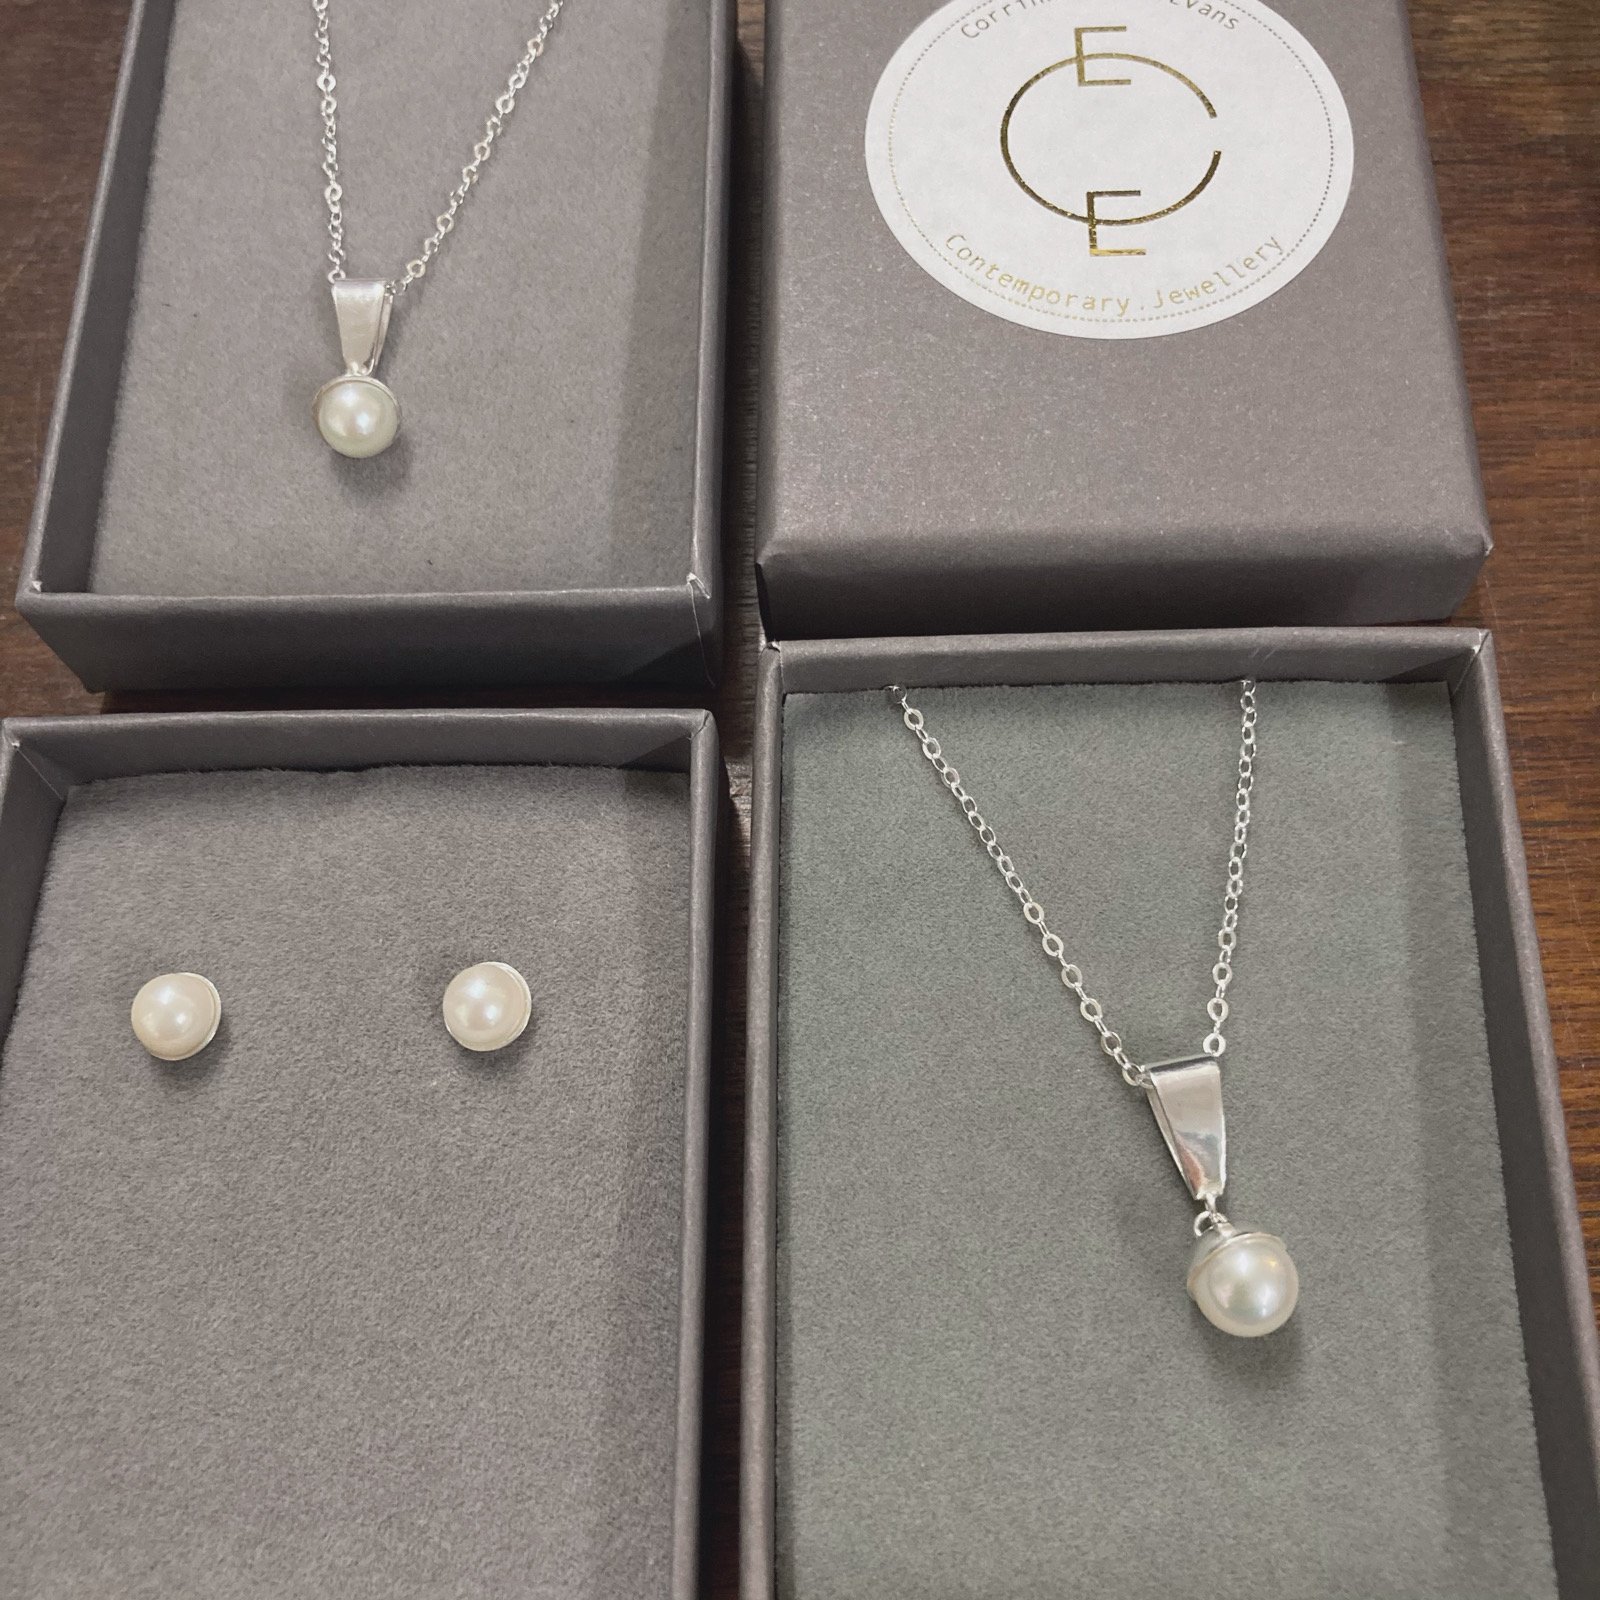 Bespoke made pearl set using customers own pearls.